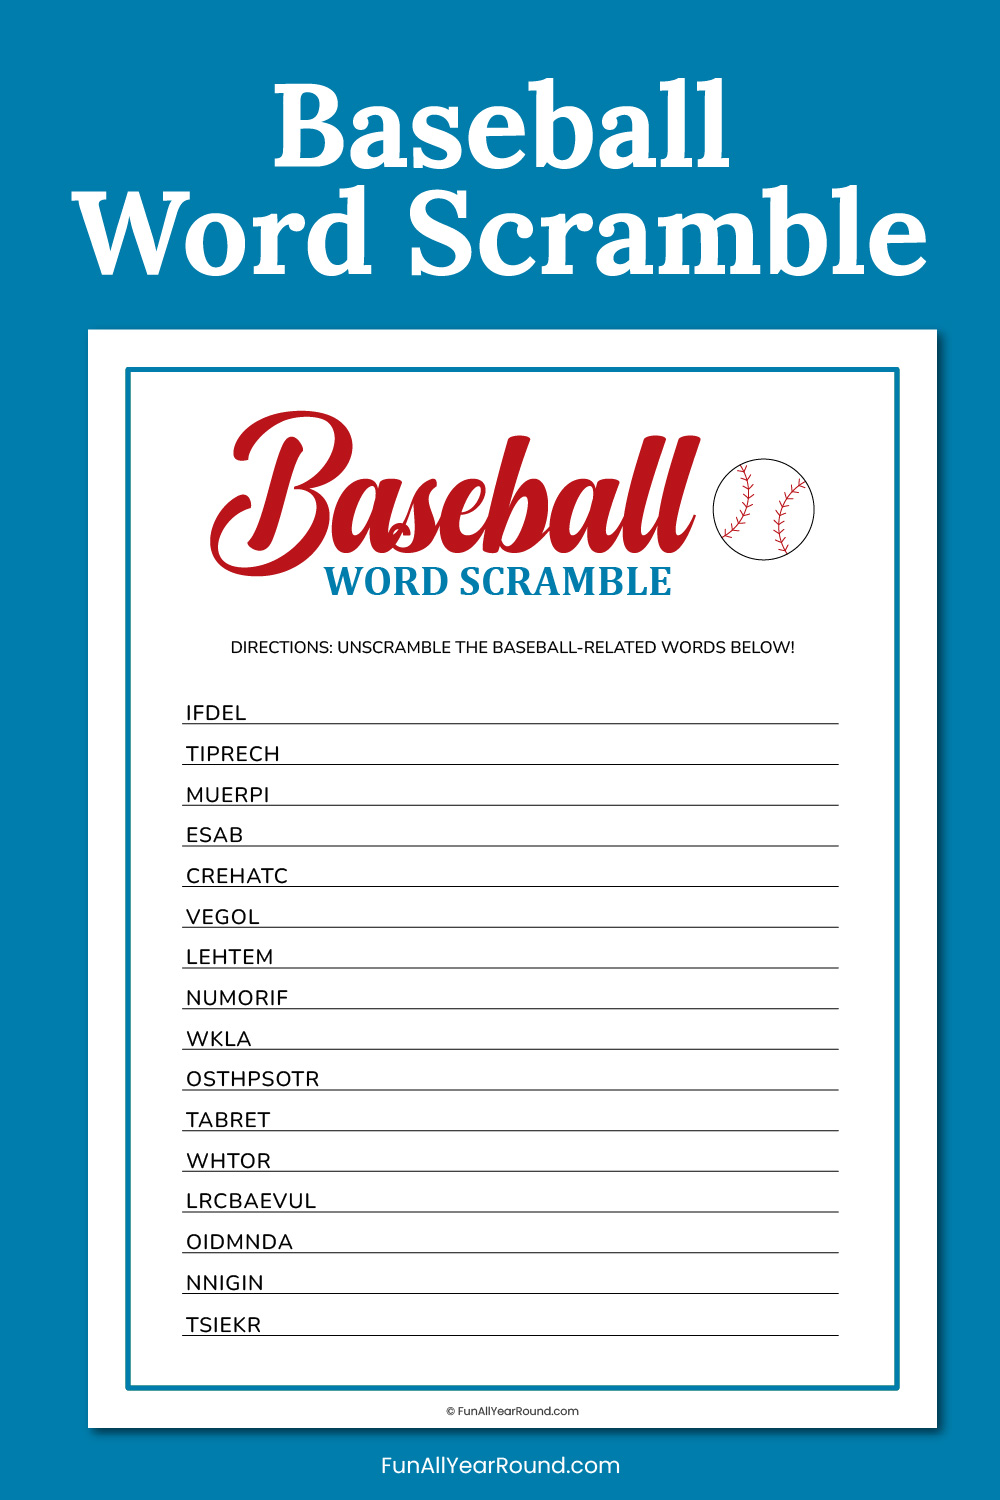 Baseball word scramble